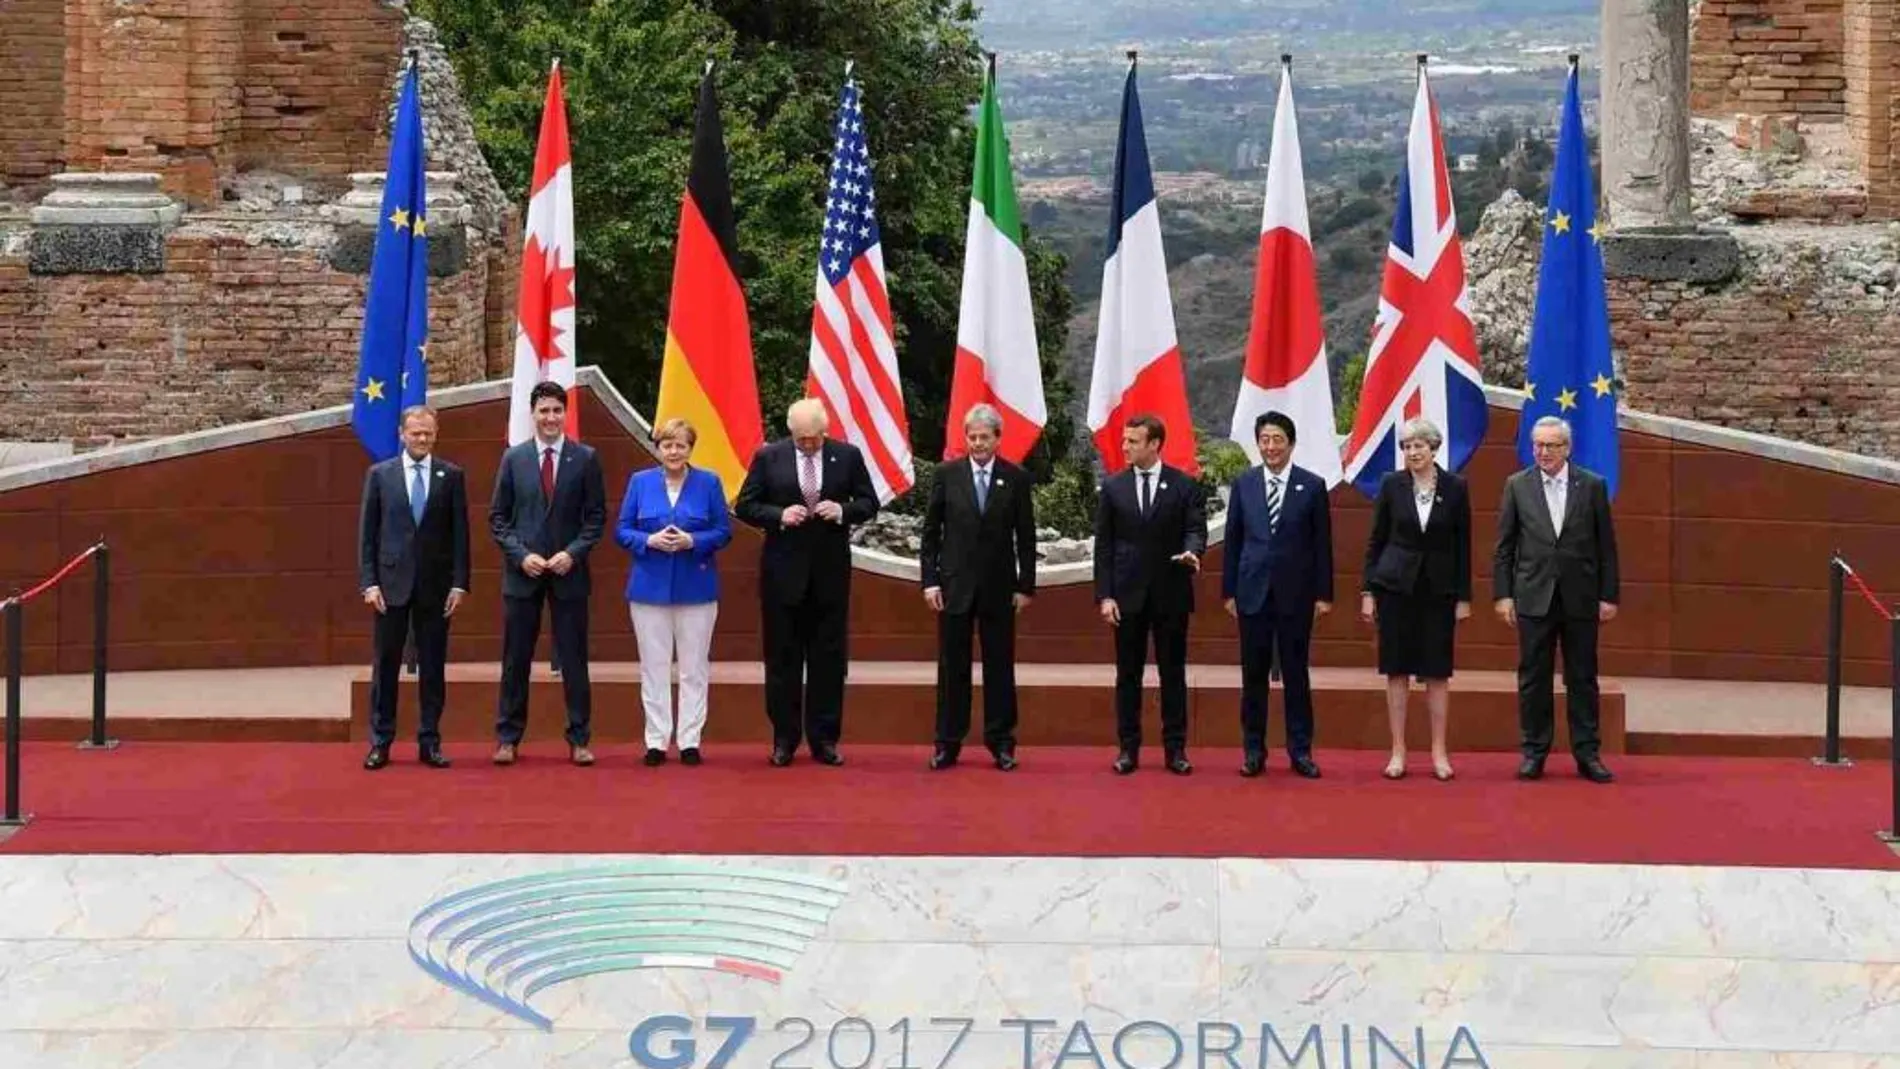 Donald Tusk, Justin Trudeau, Angela Merkel, Donald J. Trump, Paolo Gentiloni, Emmanuel Macron, Shinzo Abe, Theresa May, y Jean-Claude Juncker, posan para la foto de familia de la cumbre de líderes del G7 en Taormina (Italia)